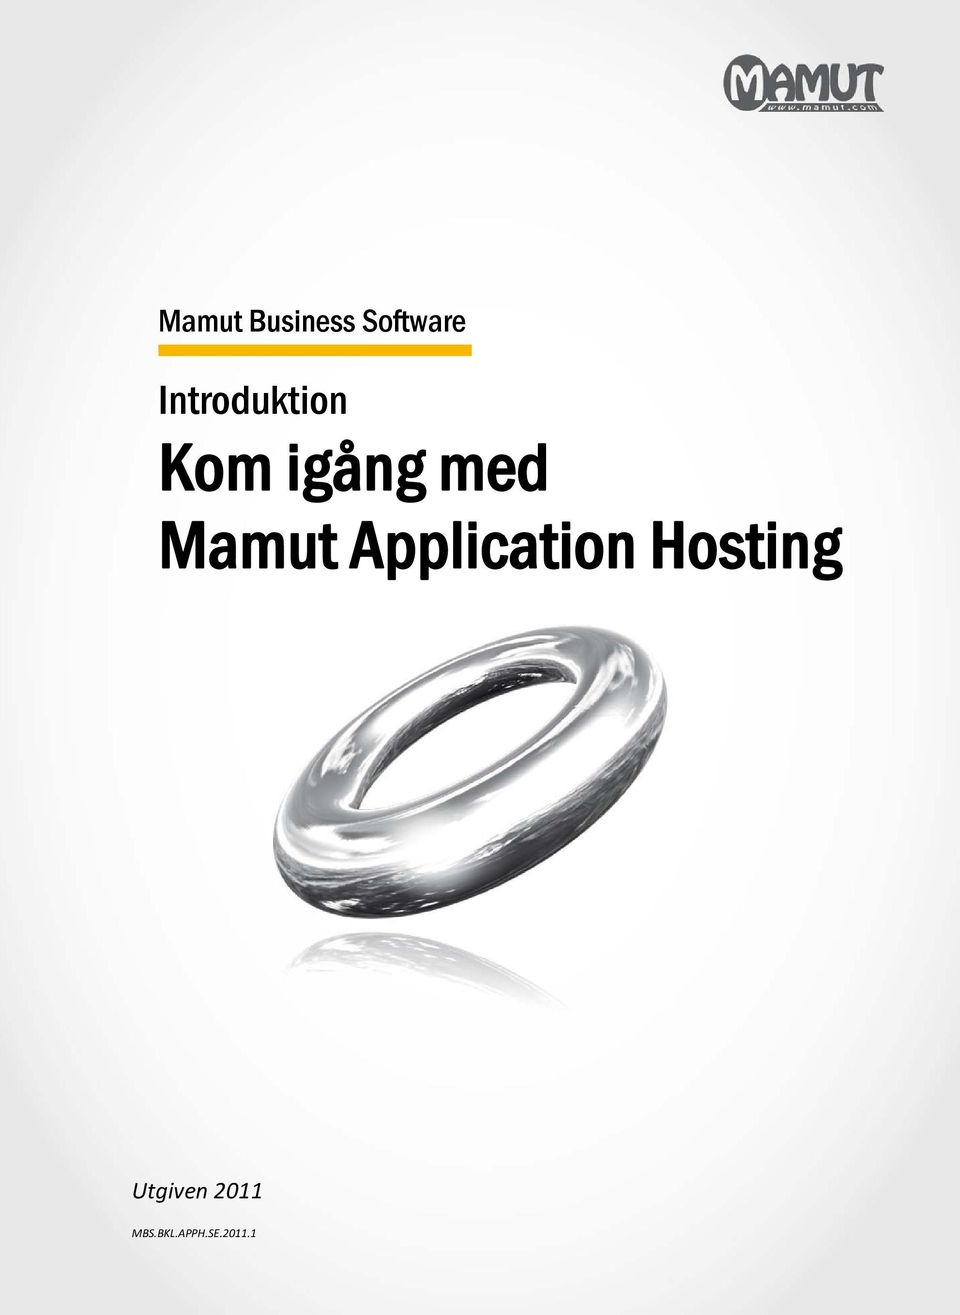 Mamut Application Hosting